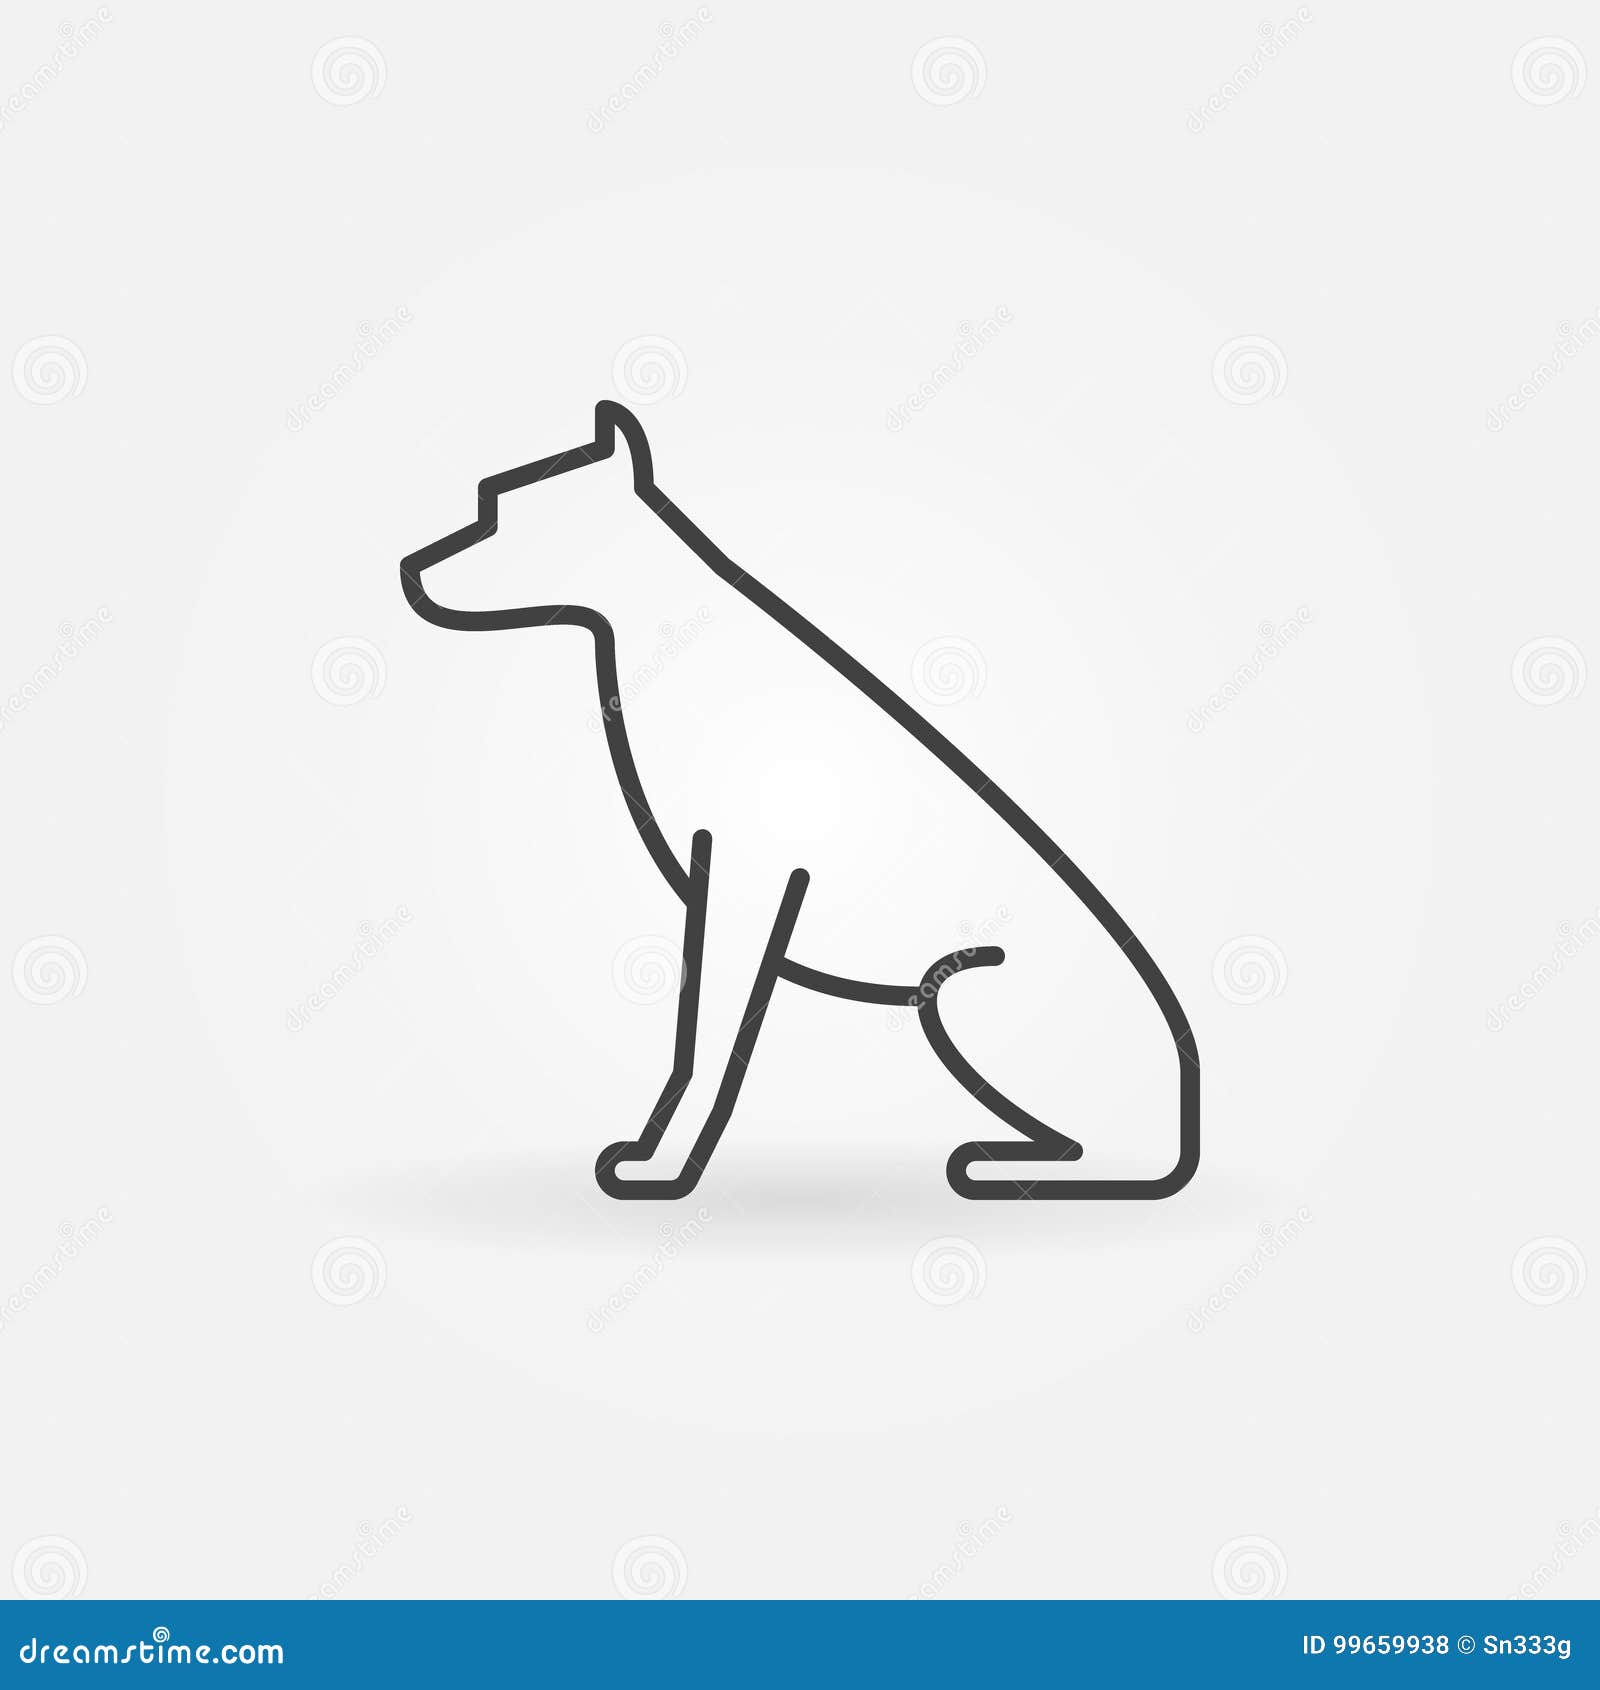 Sitting dog vector icon stock vector. Illustration of logo - 99659938